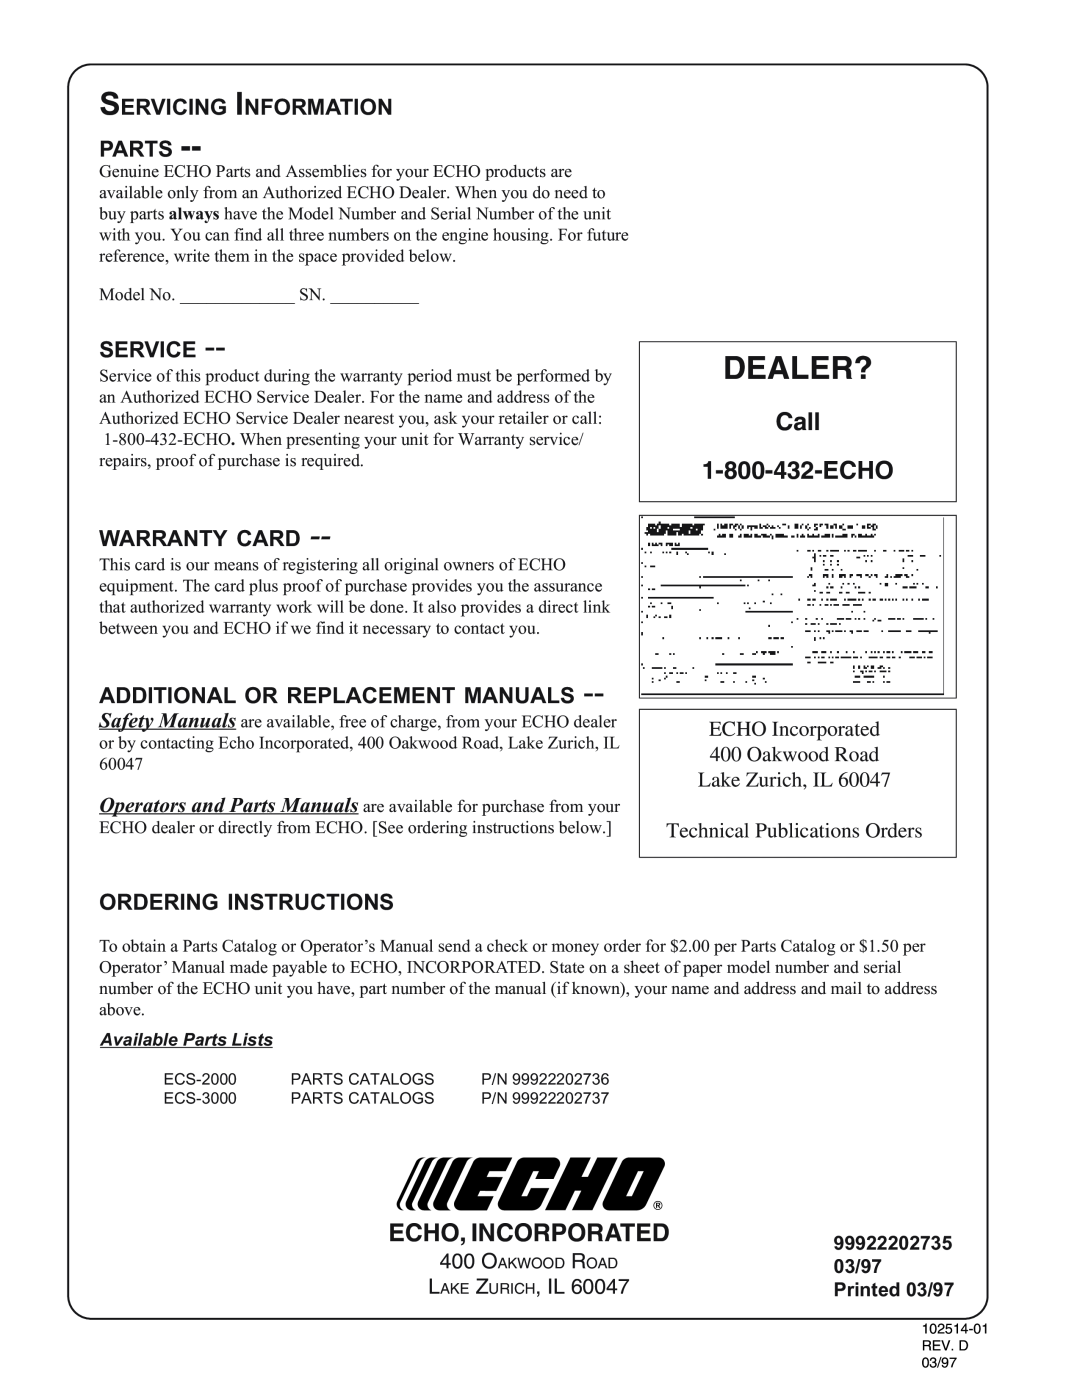 Echo ECS-2000 Dealer?, Call 1-800-432-ECHO, ECHO Incorporated 400 Oakwood Road, Echo, Incorporated, Service, Warranty Card 